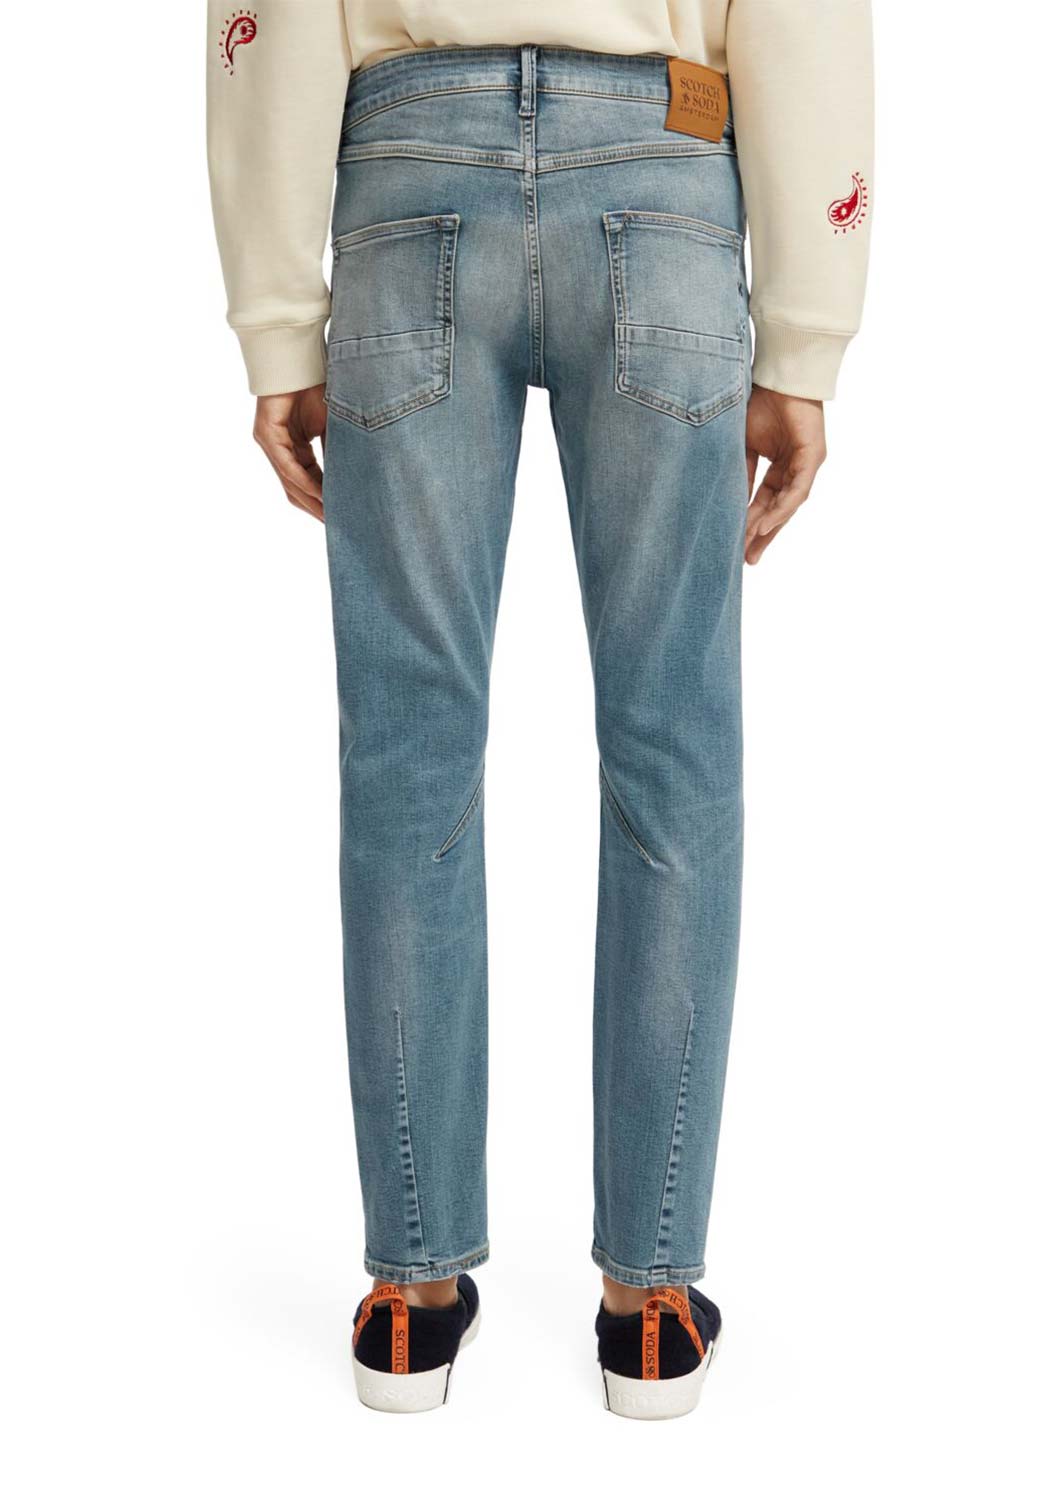 Slate Gray ג'ינס ארוך לגברים The Single SCOTCH & SODA